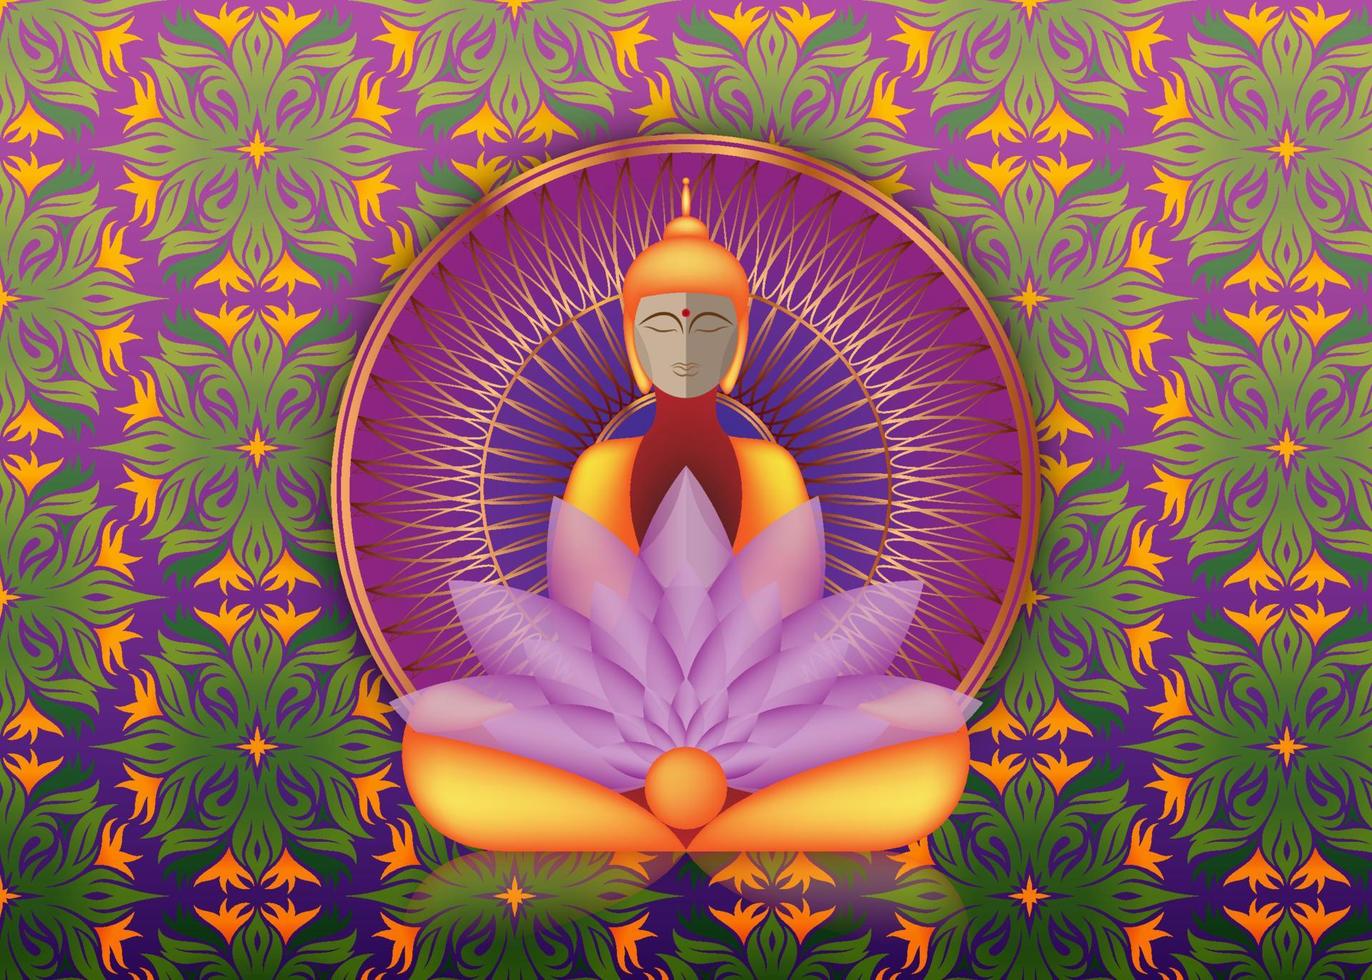 Buddha sitting in meditation over Golden Mandala, esoteric purple lotus vector illustration. Vintage sacred culture background. Indian, Buddhism, spiritual art. Gold, spirituality, Thai god, yoga